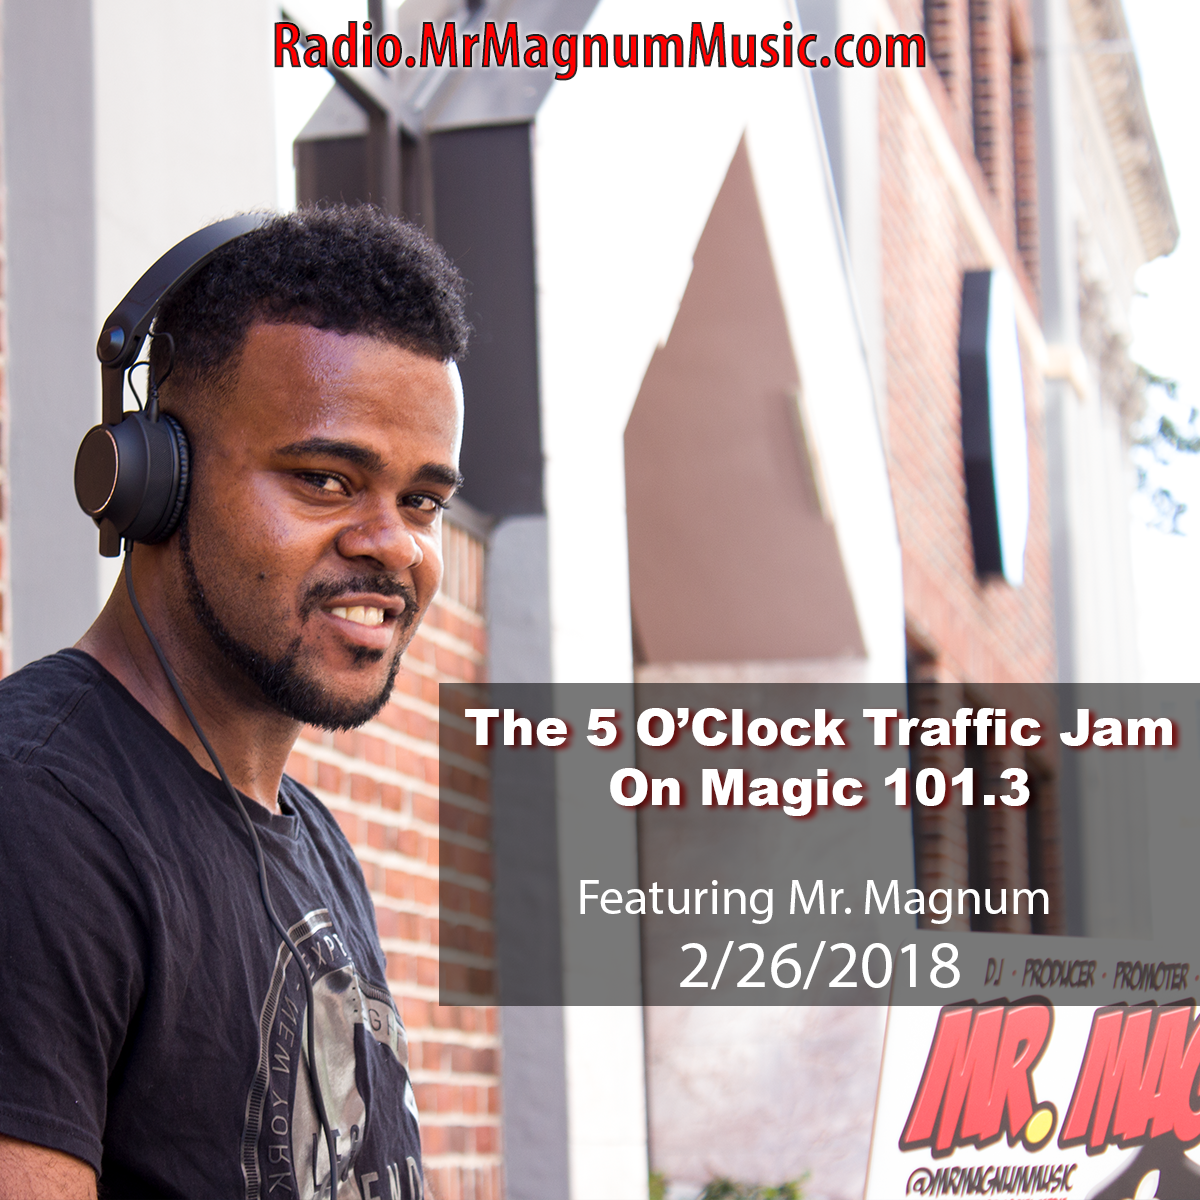 The 5 O'Clock Traffic Jam 20180226 featuring Gainesville's #1 DJ, Mr. Magnum on Magic 101.3